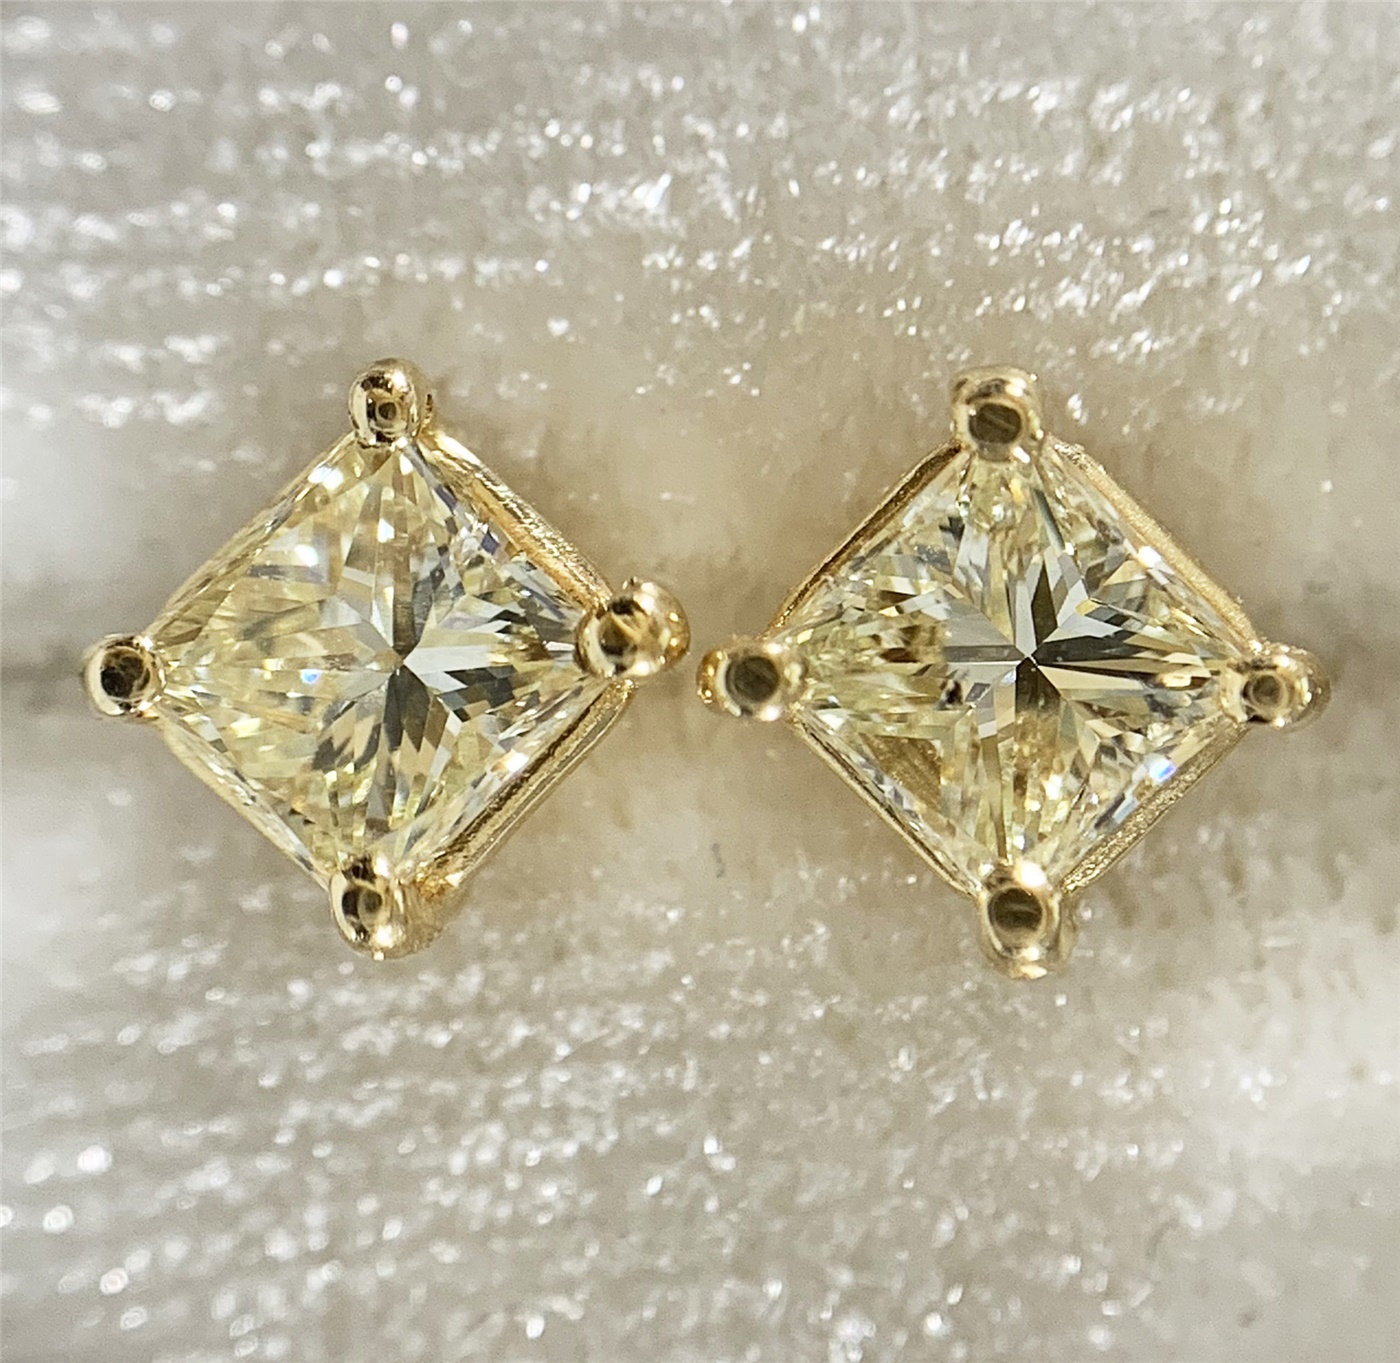 1 ct Princess Cut Diamond Stud Earrings, only $1495